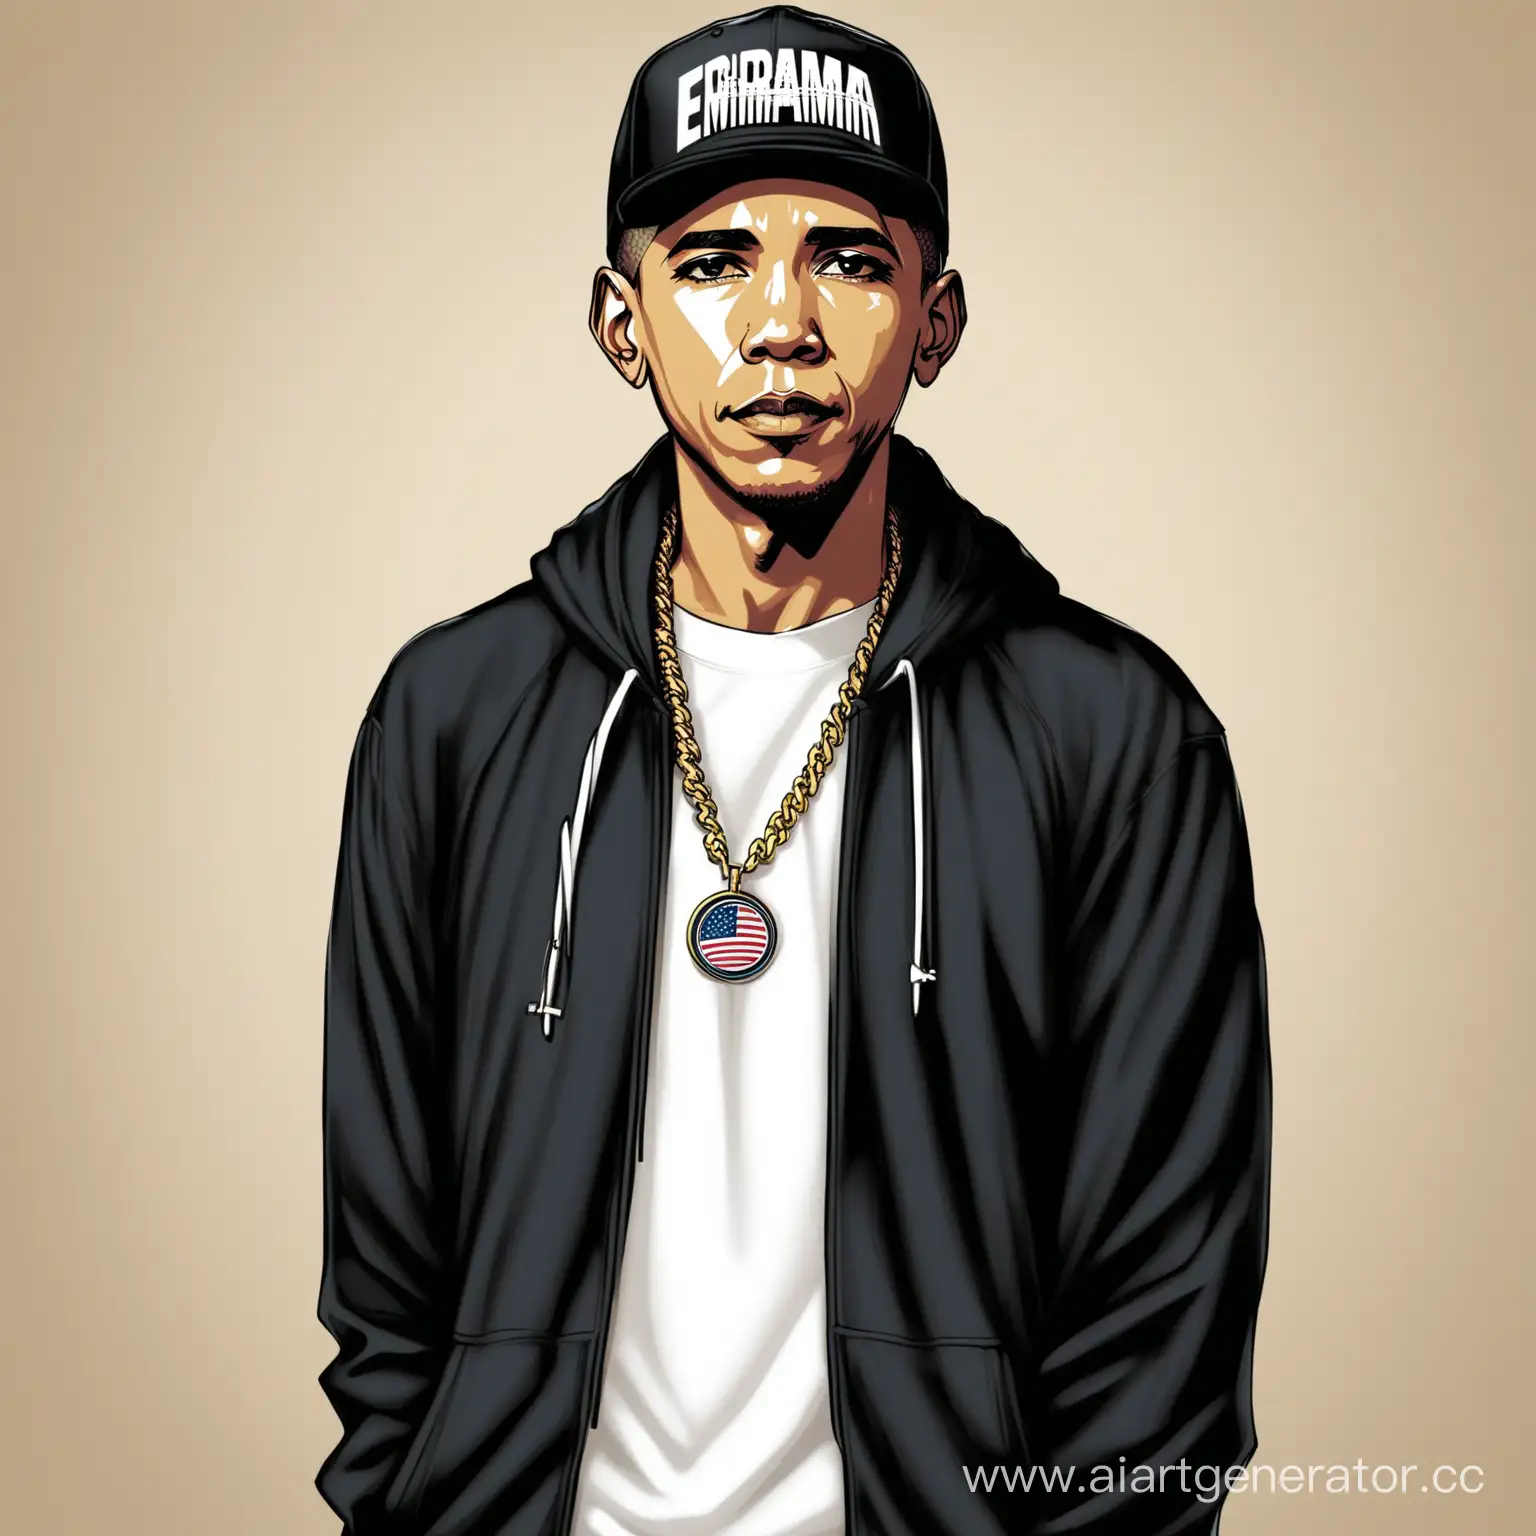 Eminem-and-Obama-Fusion-Portrait-Iconic-Rap-and-Political-Persona-Merge